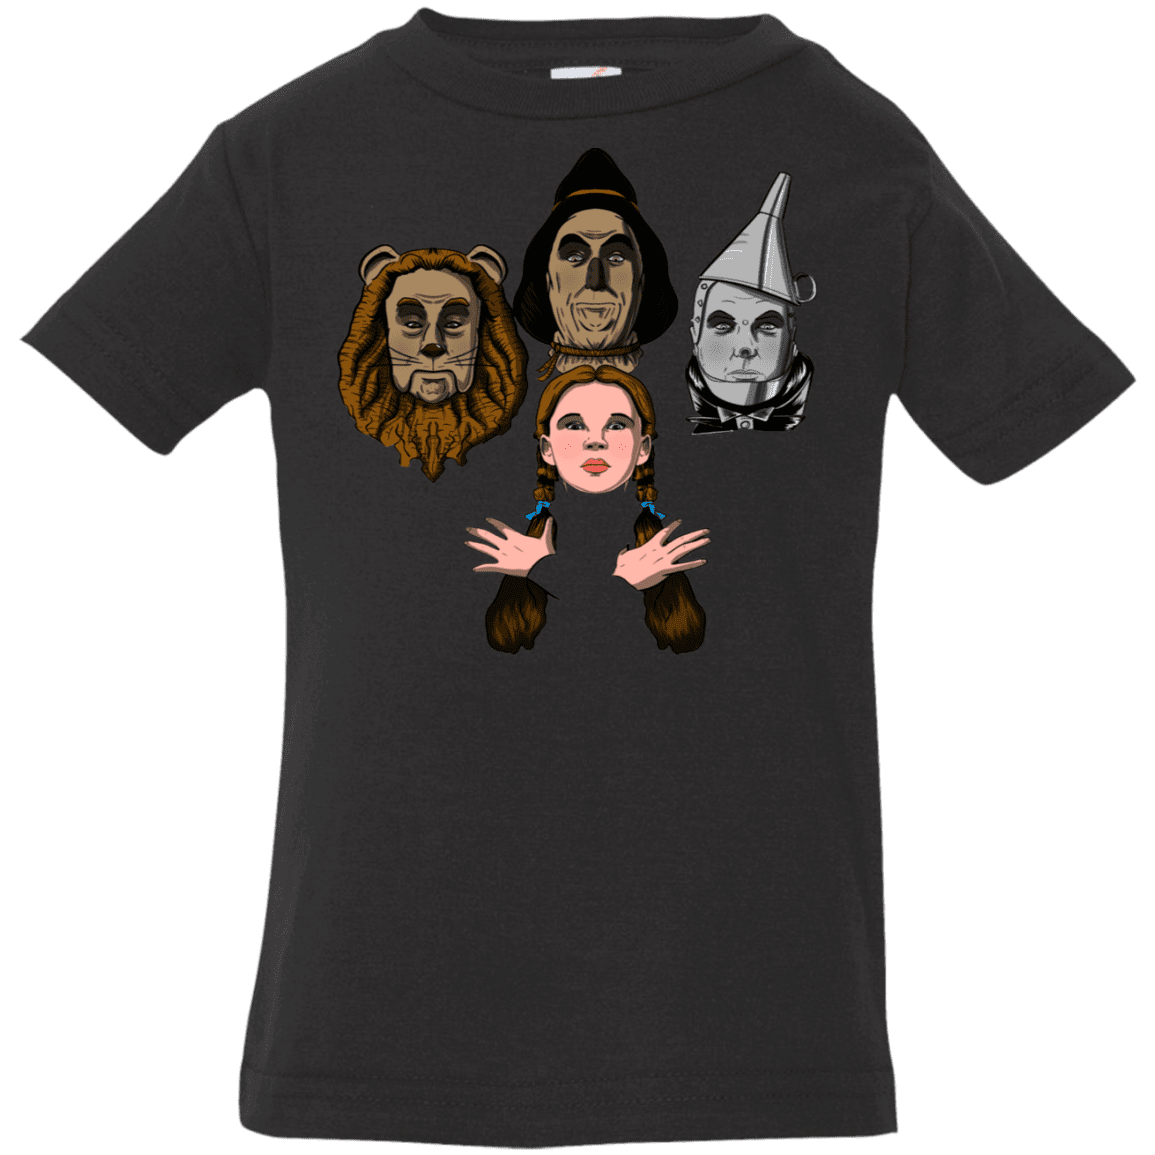 T-Shirts Black / 6 Months Oz Rhapsody Infant Premium T-Shirt